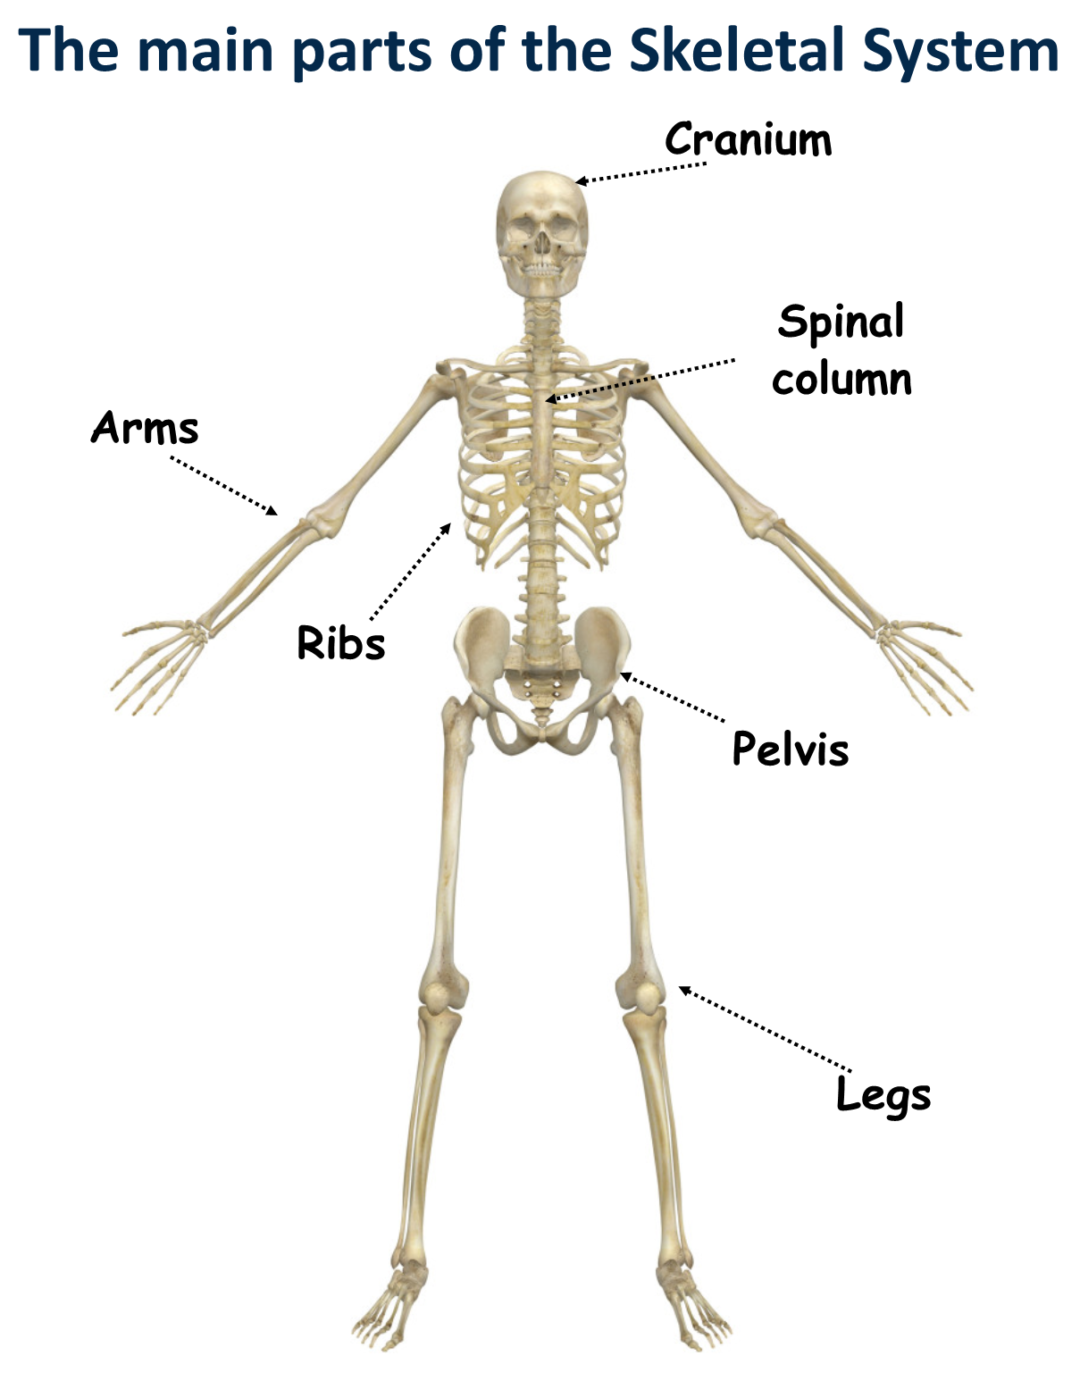 The Skeletal System Canadiensschool 3216